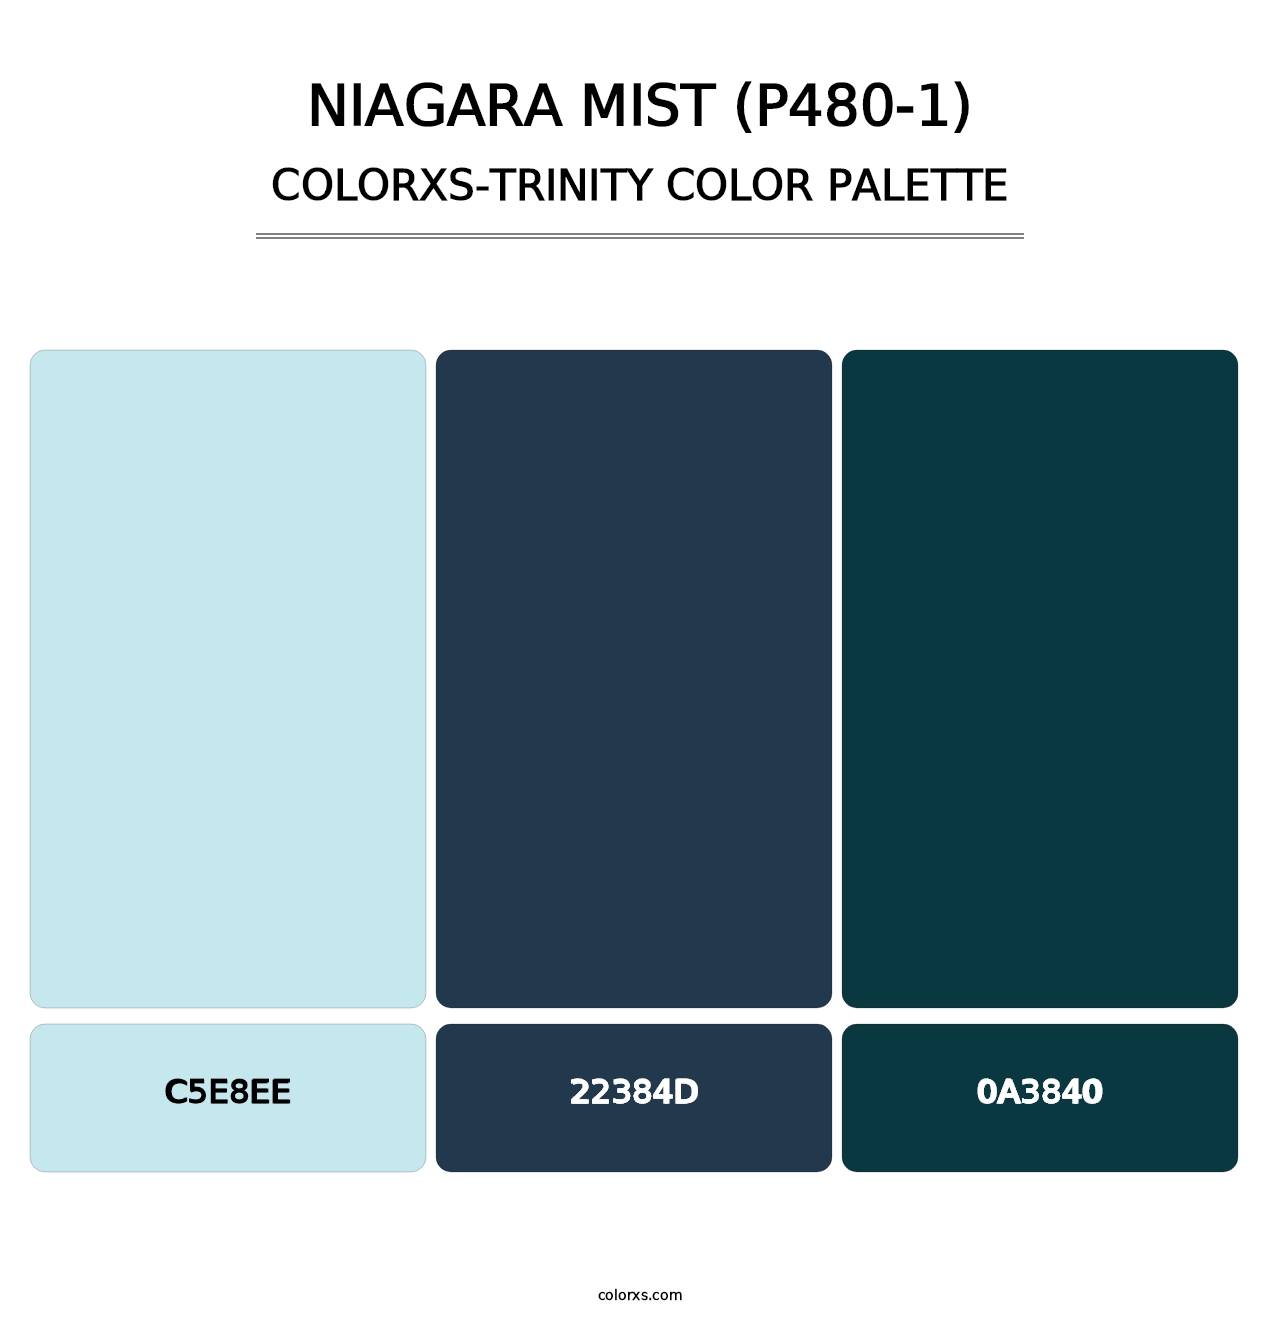 Niagara Mist (P480-1) - Colorxs Trinity Palette